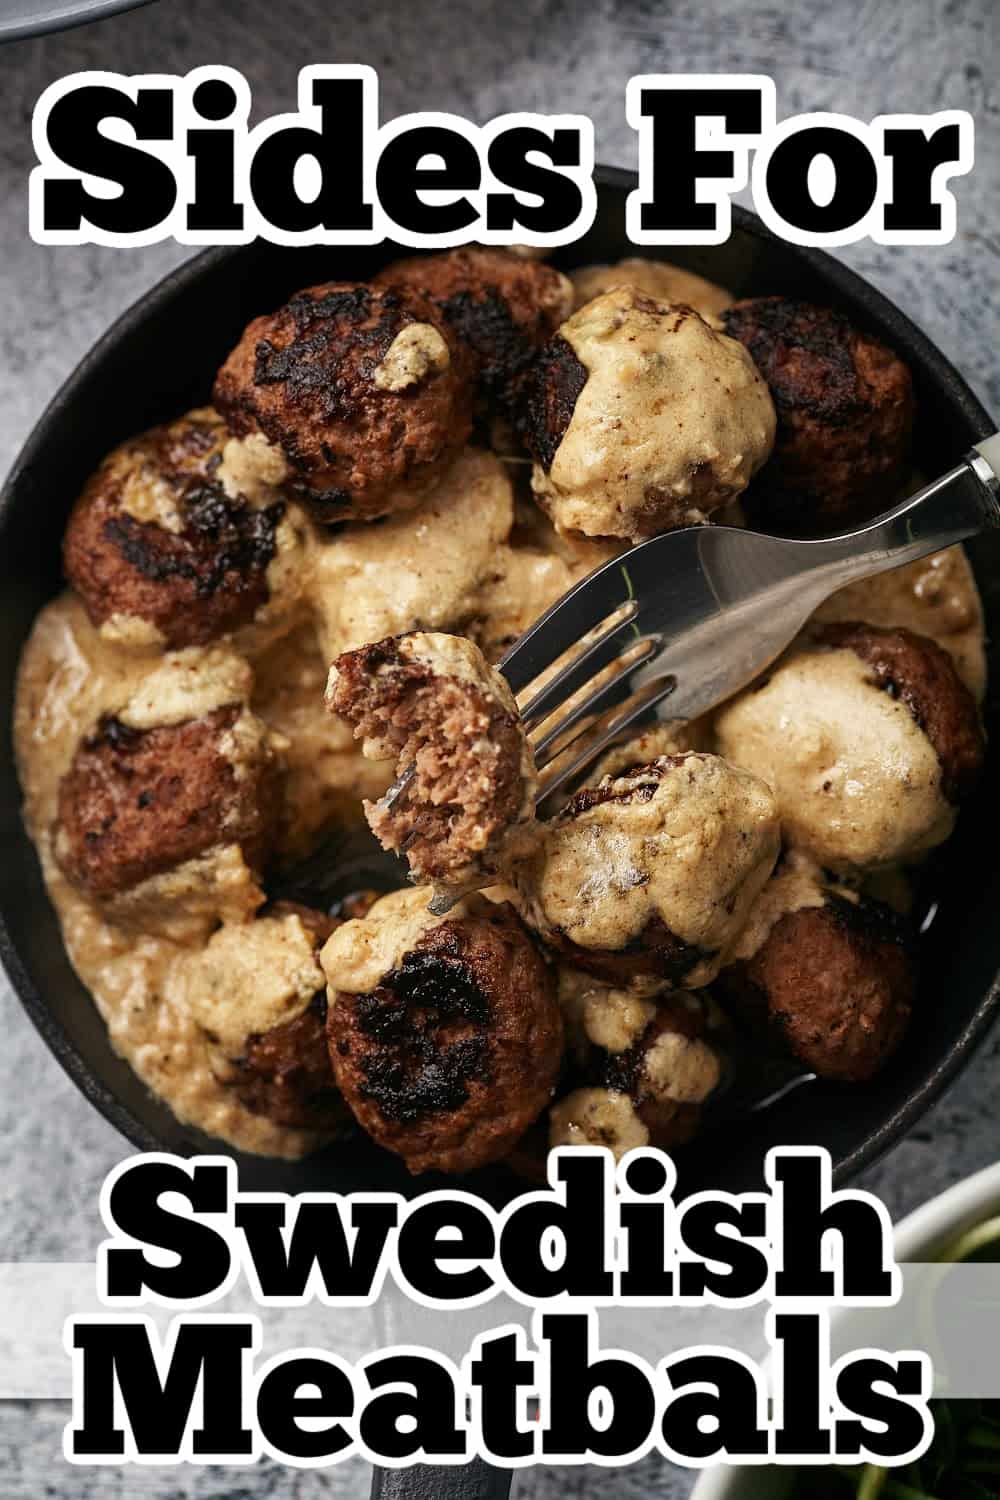 Sides for swedish meatballs.